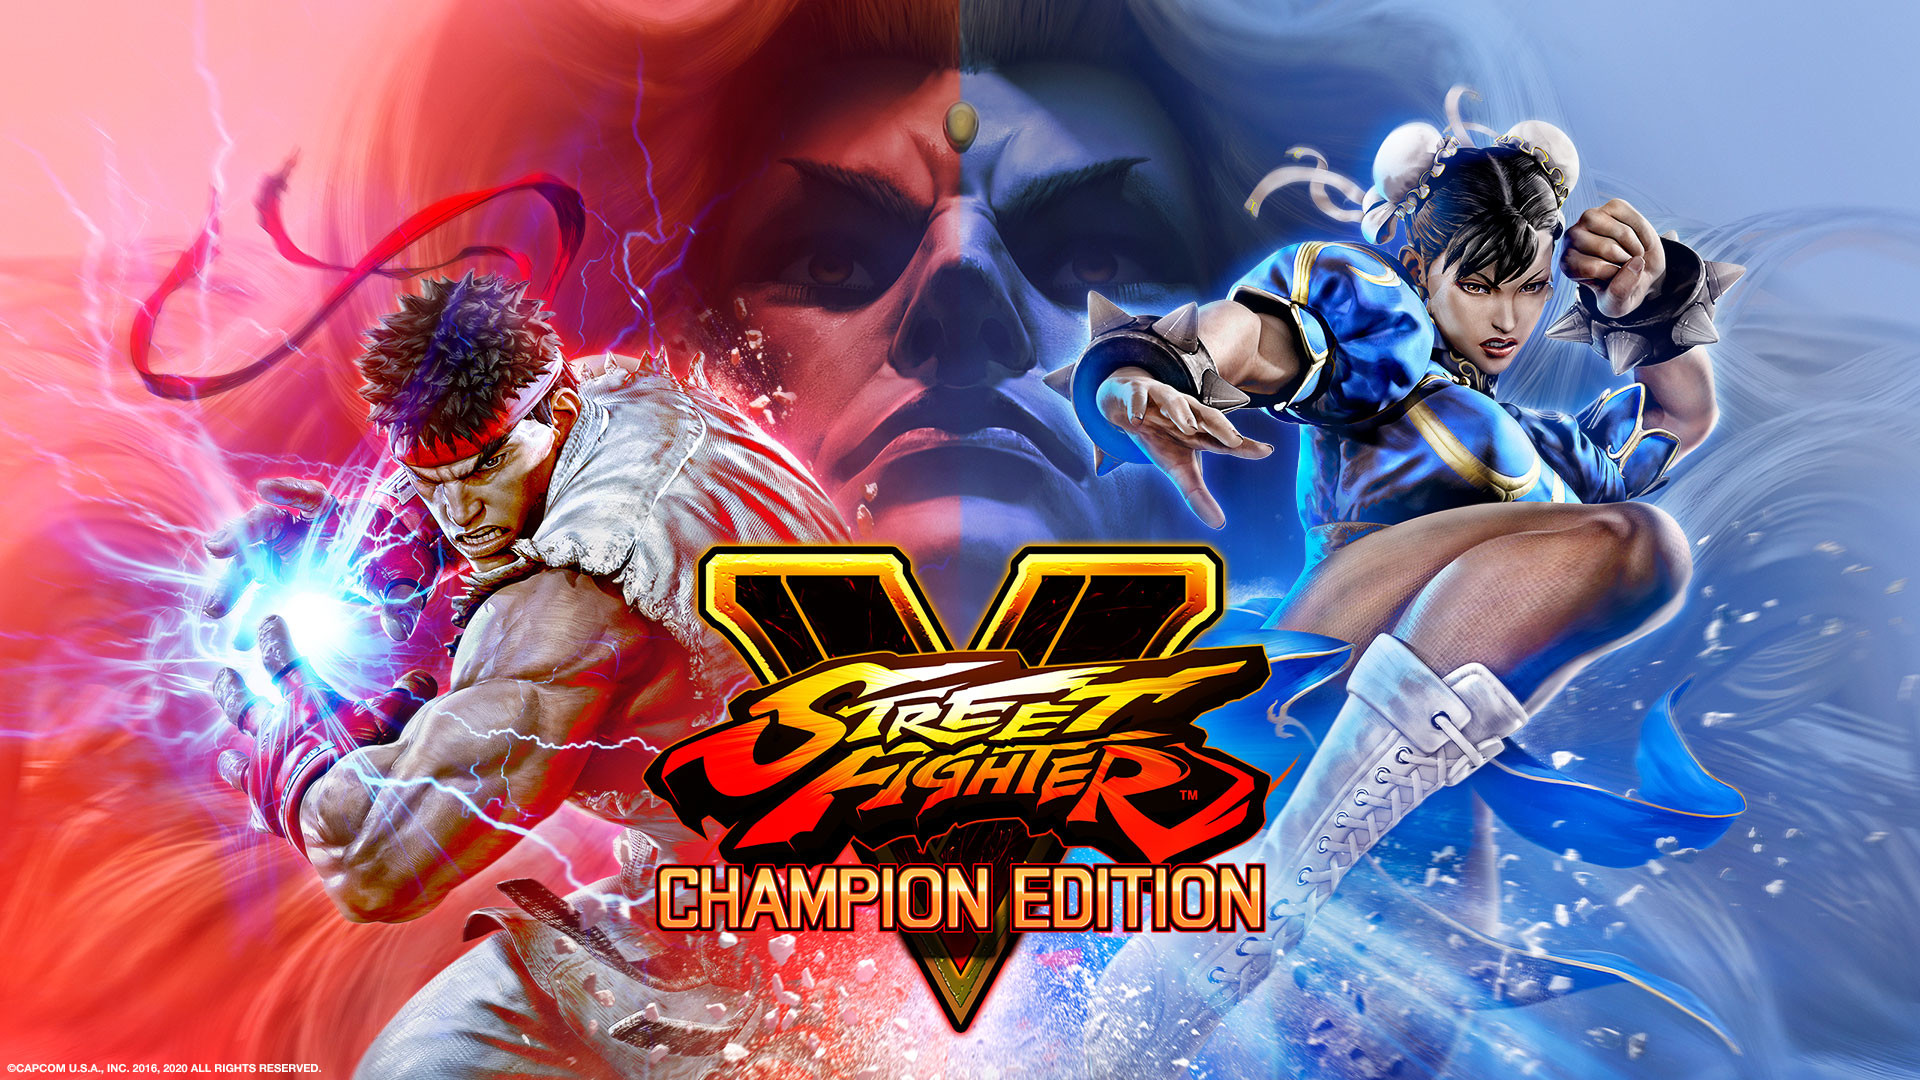 Street Fighter V Champion Edition - Wallpaper Full HD - Ryu e Chun-Li